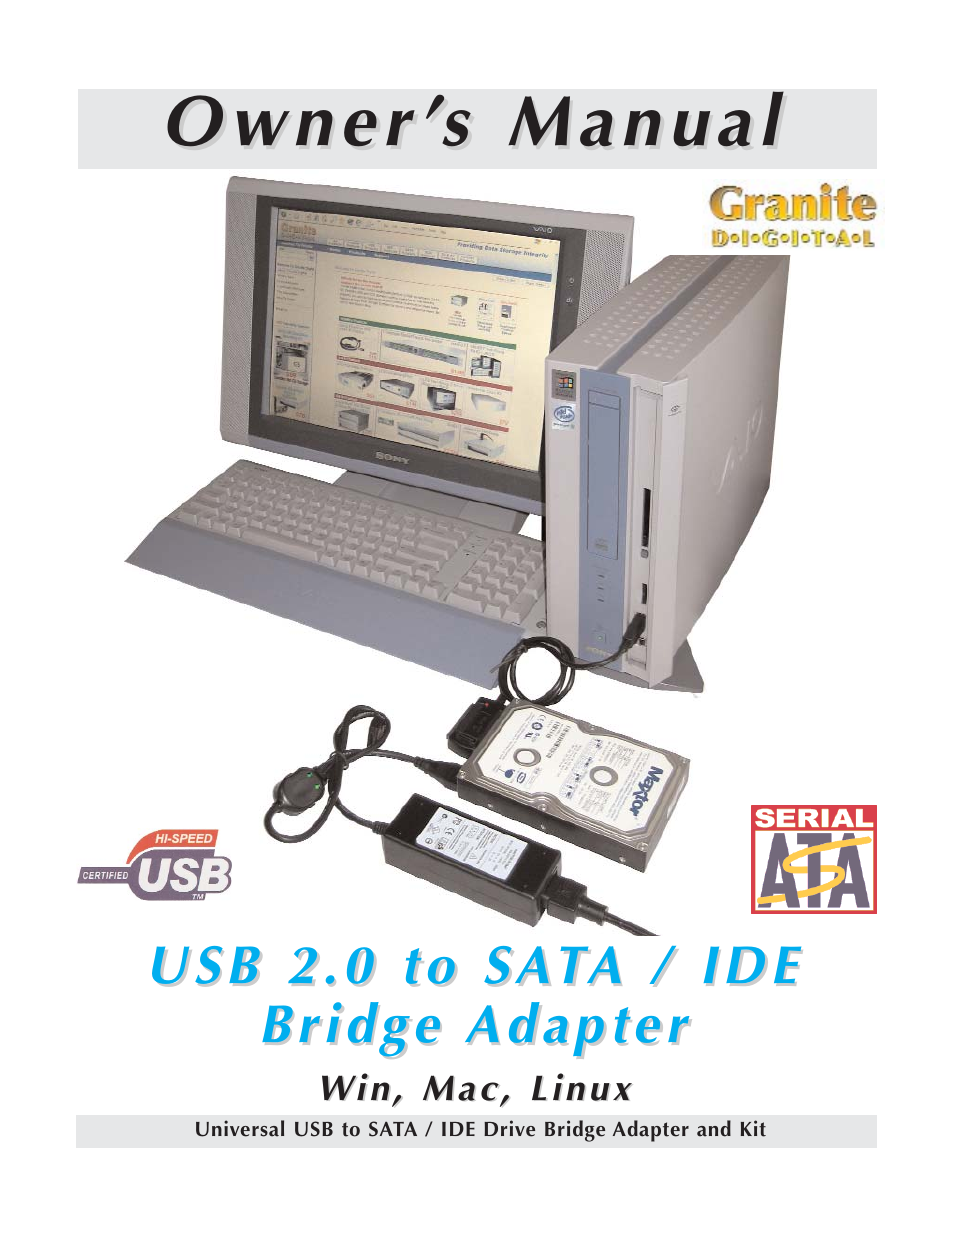 Granite Digital USB Emergency Drive User Manual | 16 pages